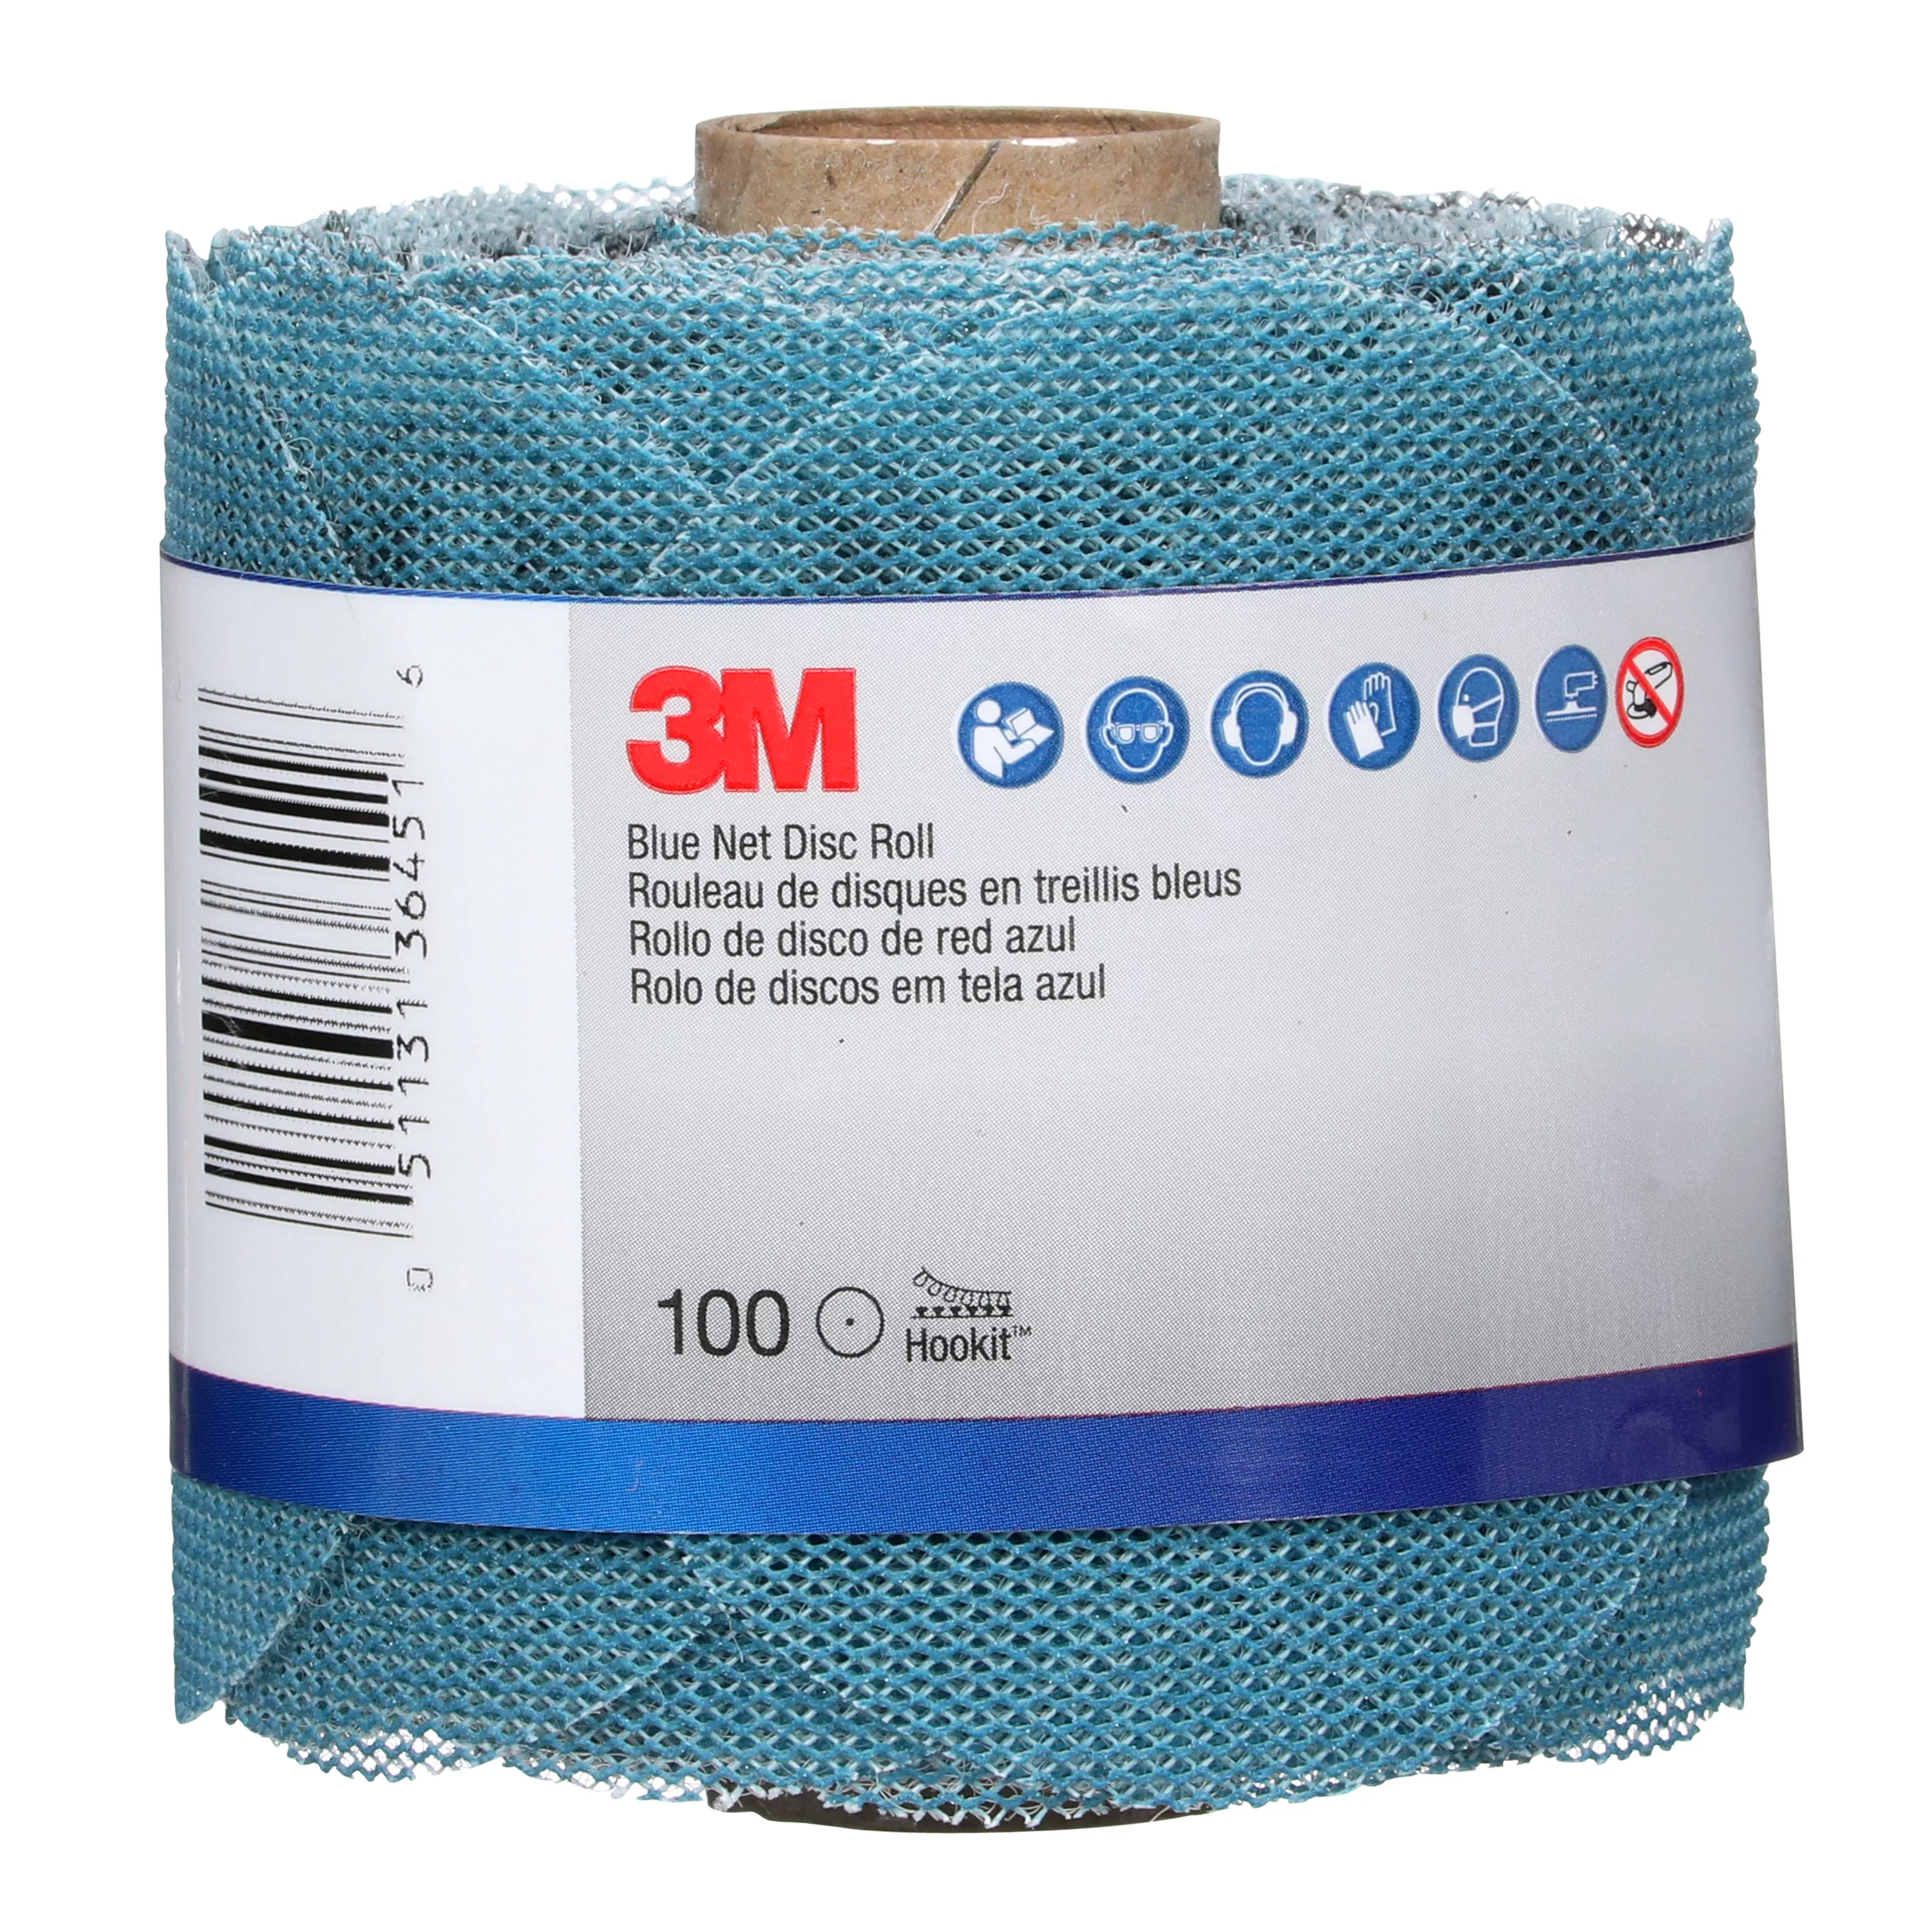 SKU 7100254369 | 3M™ Blue Net Disc Roll 36451